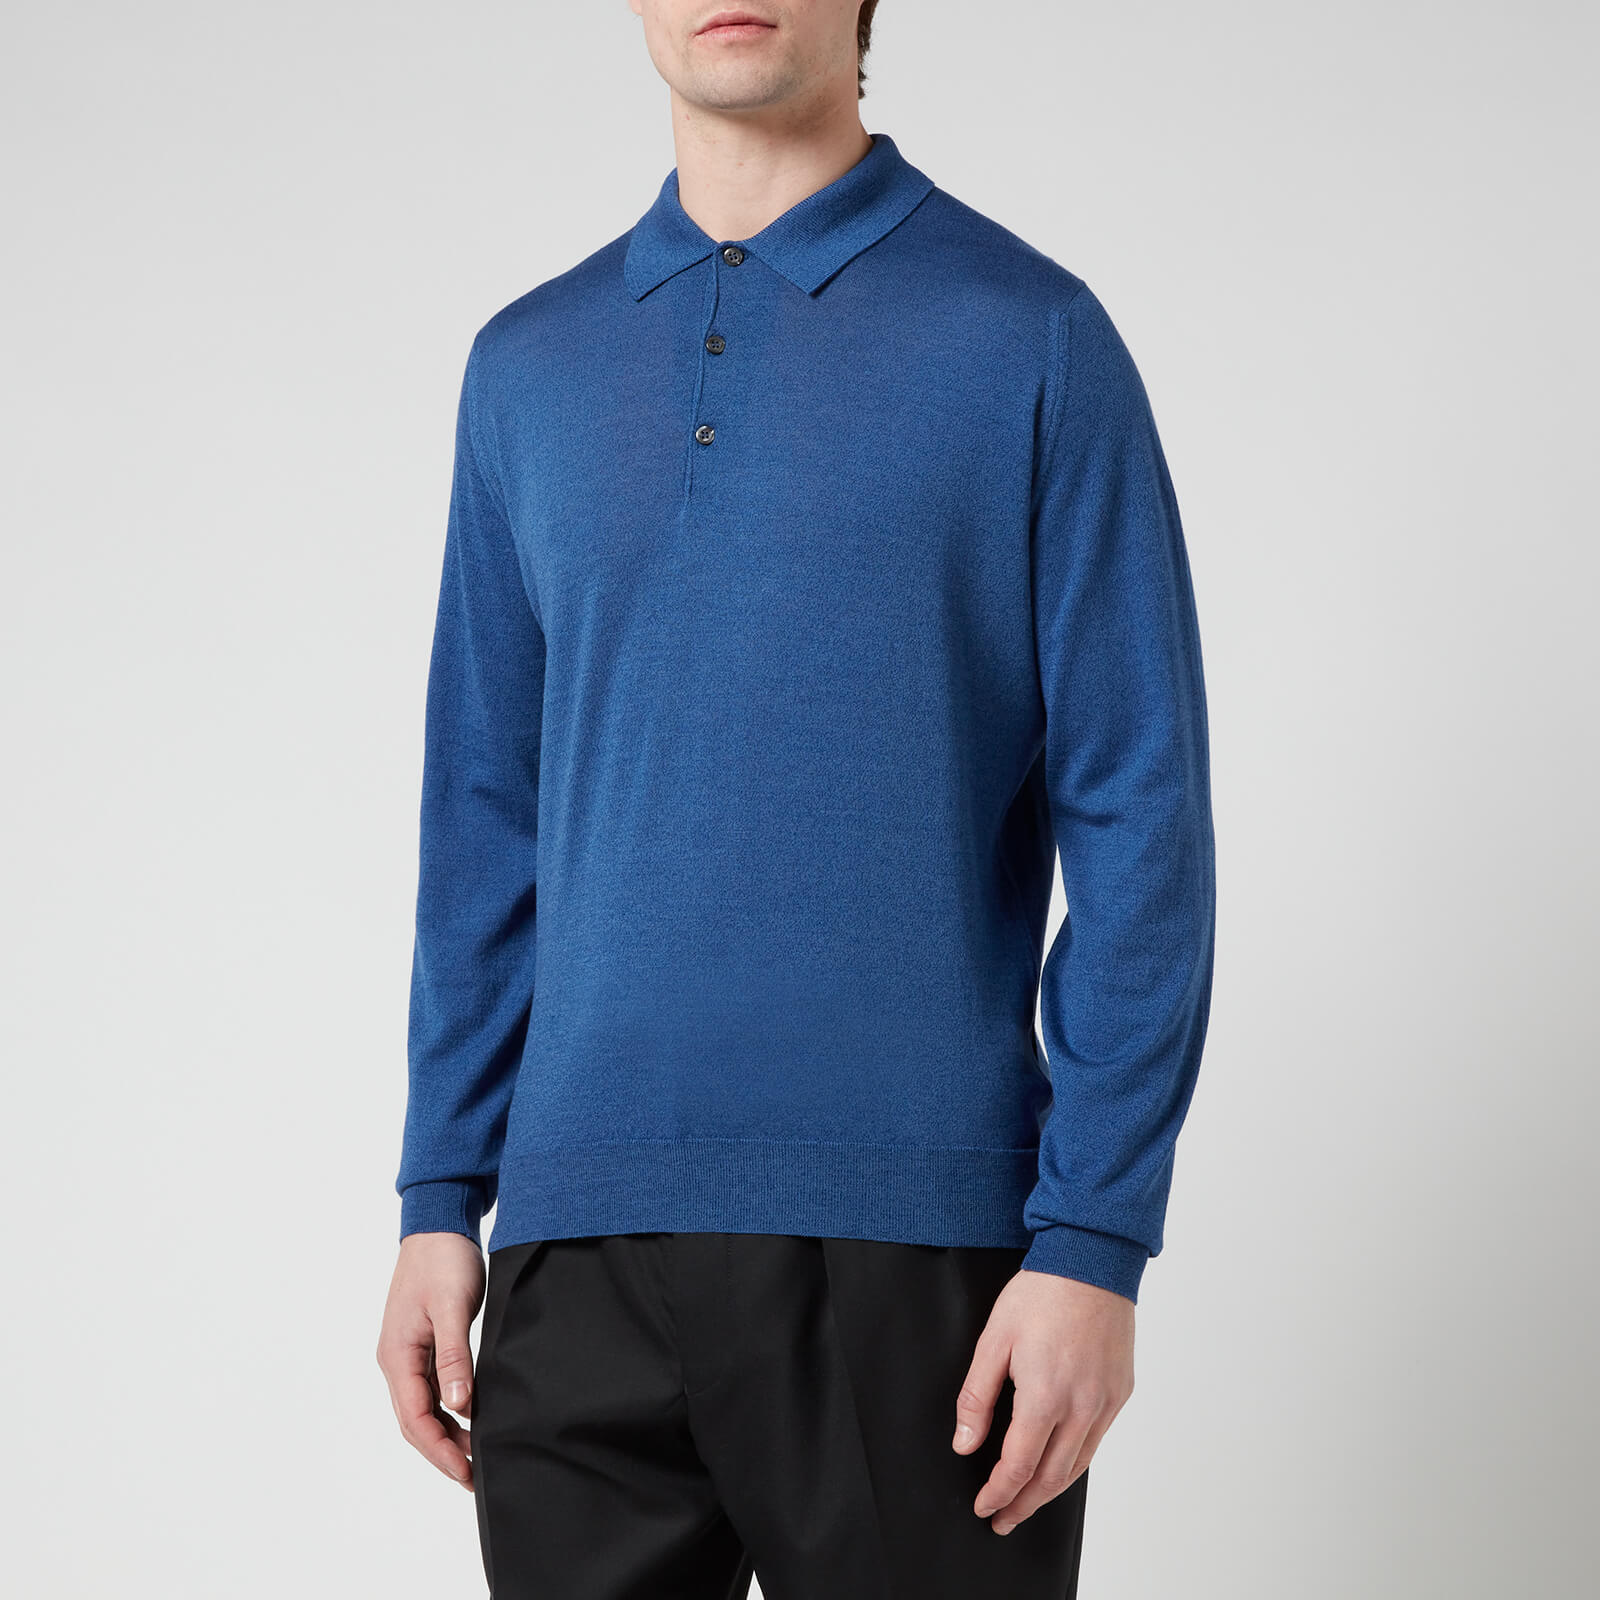 John Smedley Men's Cbelper Long Sleeve Polo Shirt - River Blue - S